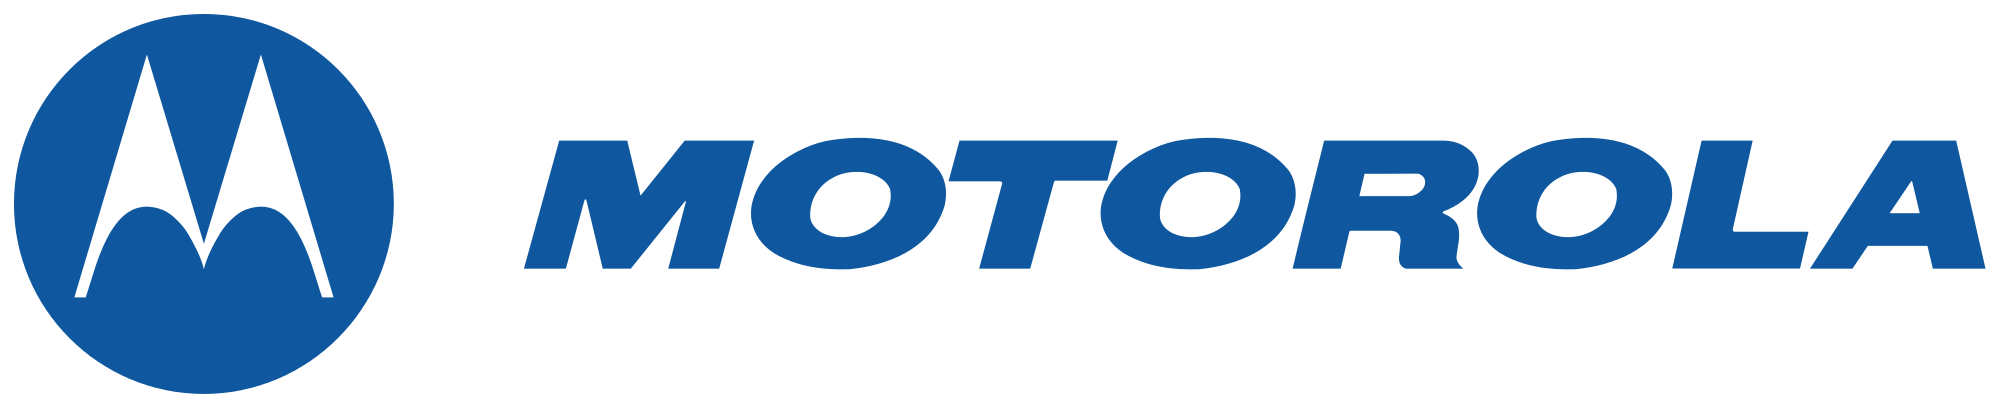 Motorola Moto G&#8309;? Plus XT1806 32 GB Smartphone - 5.5" LCD Full HD 1920 x 1080 - Cortex A53Octa-core (8 Core) 2 GHz - 3 GB RAM - Android 7.1 Nougat - 4G